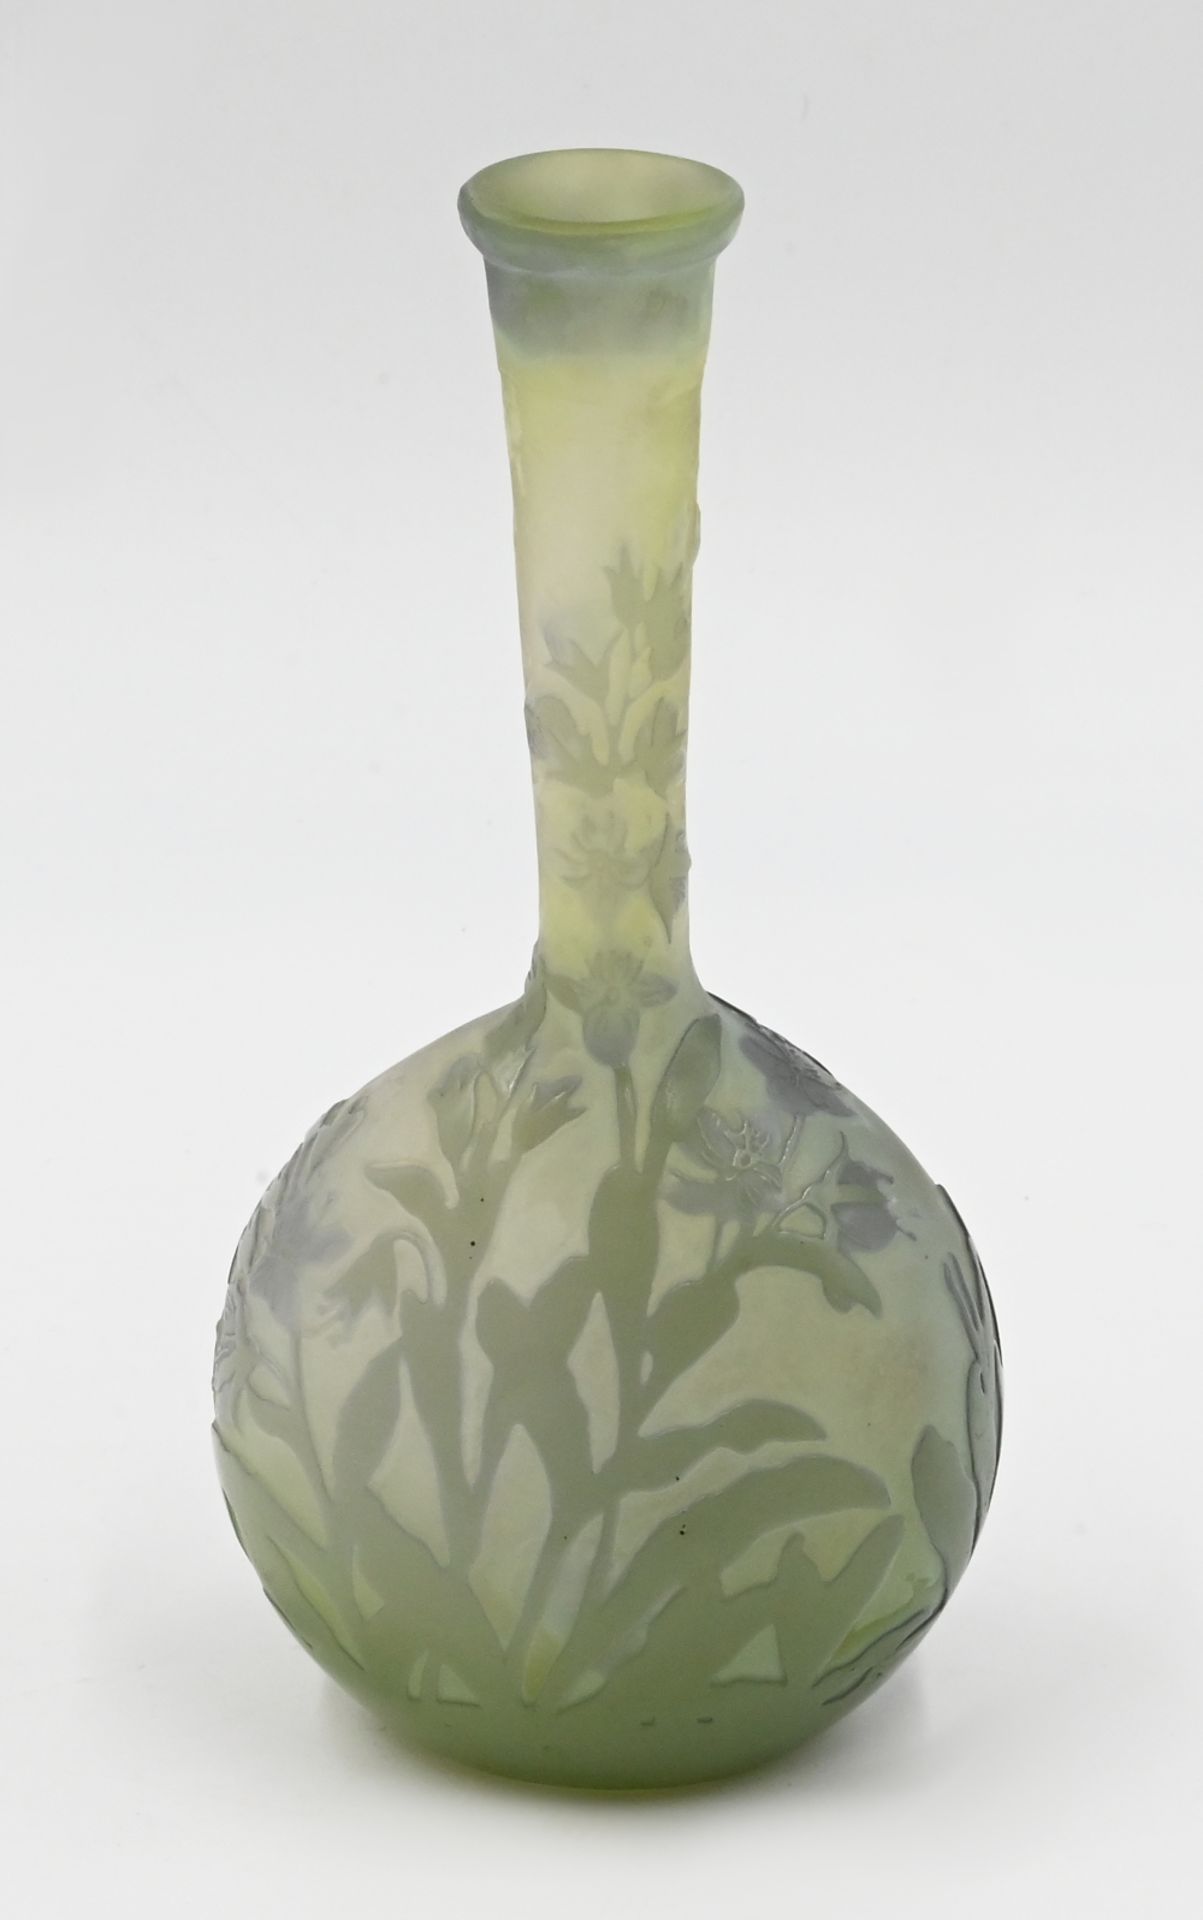 1 Solifiore Glas "Glockenblumen" wohl Anfang 20. Jh. rücks. bez. GALLÉ (wohl Émile Gallé 1846 Nancy-